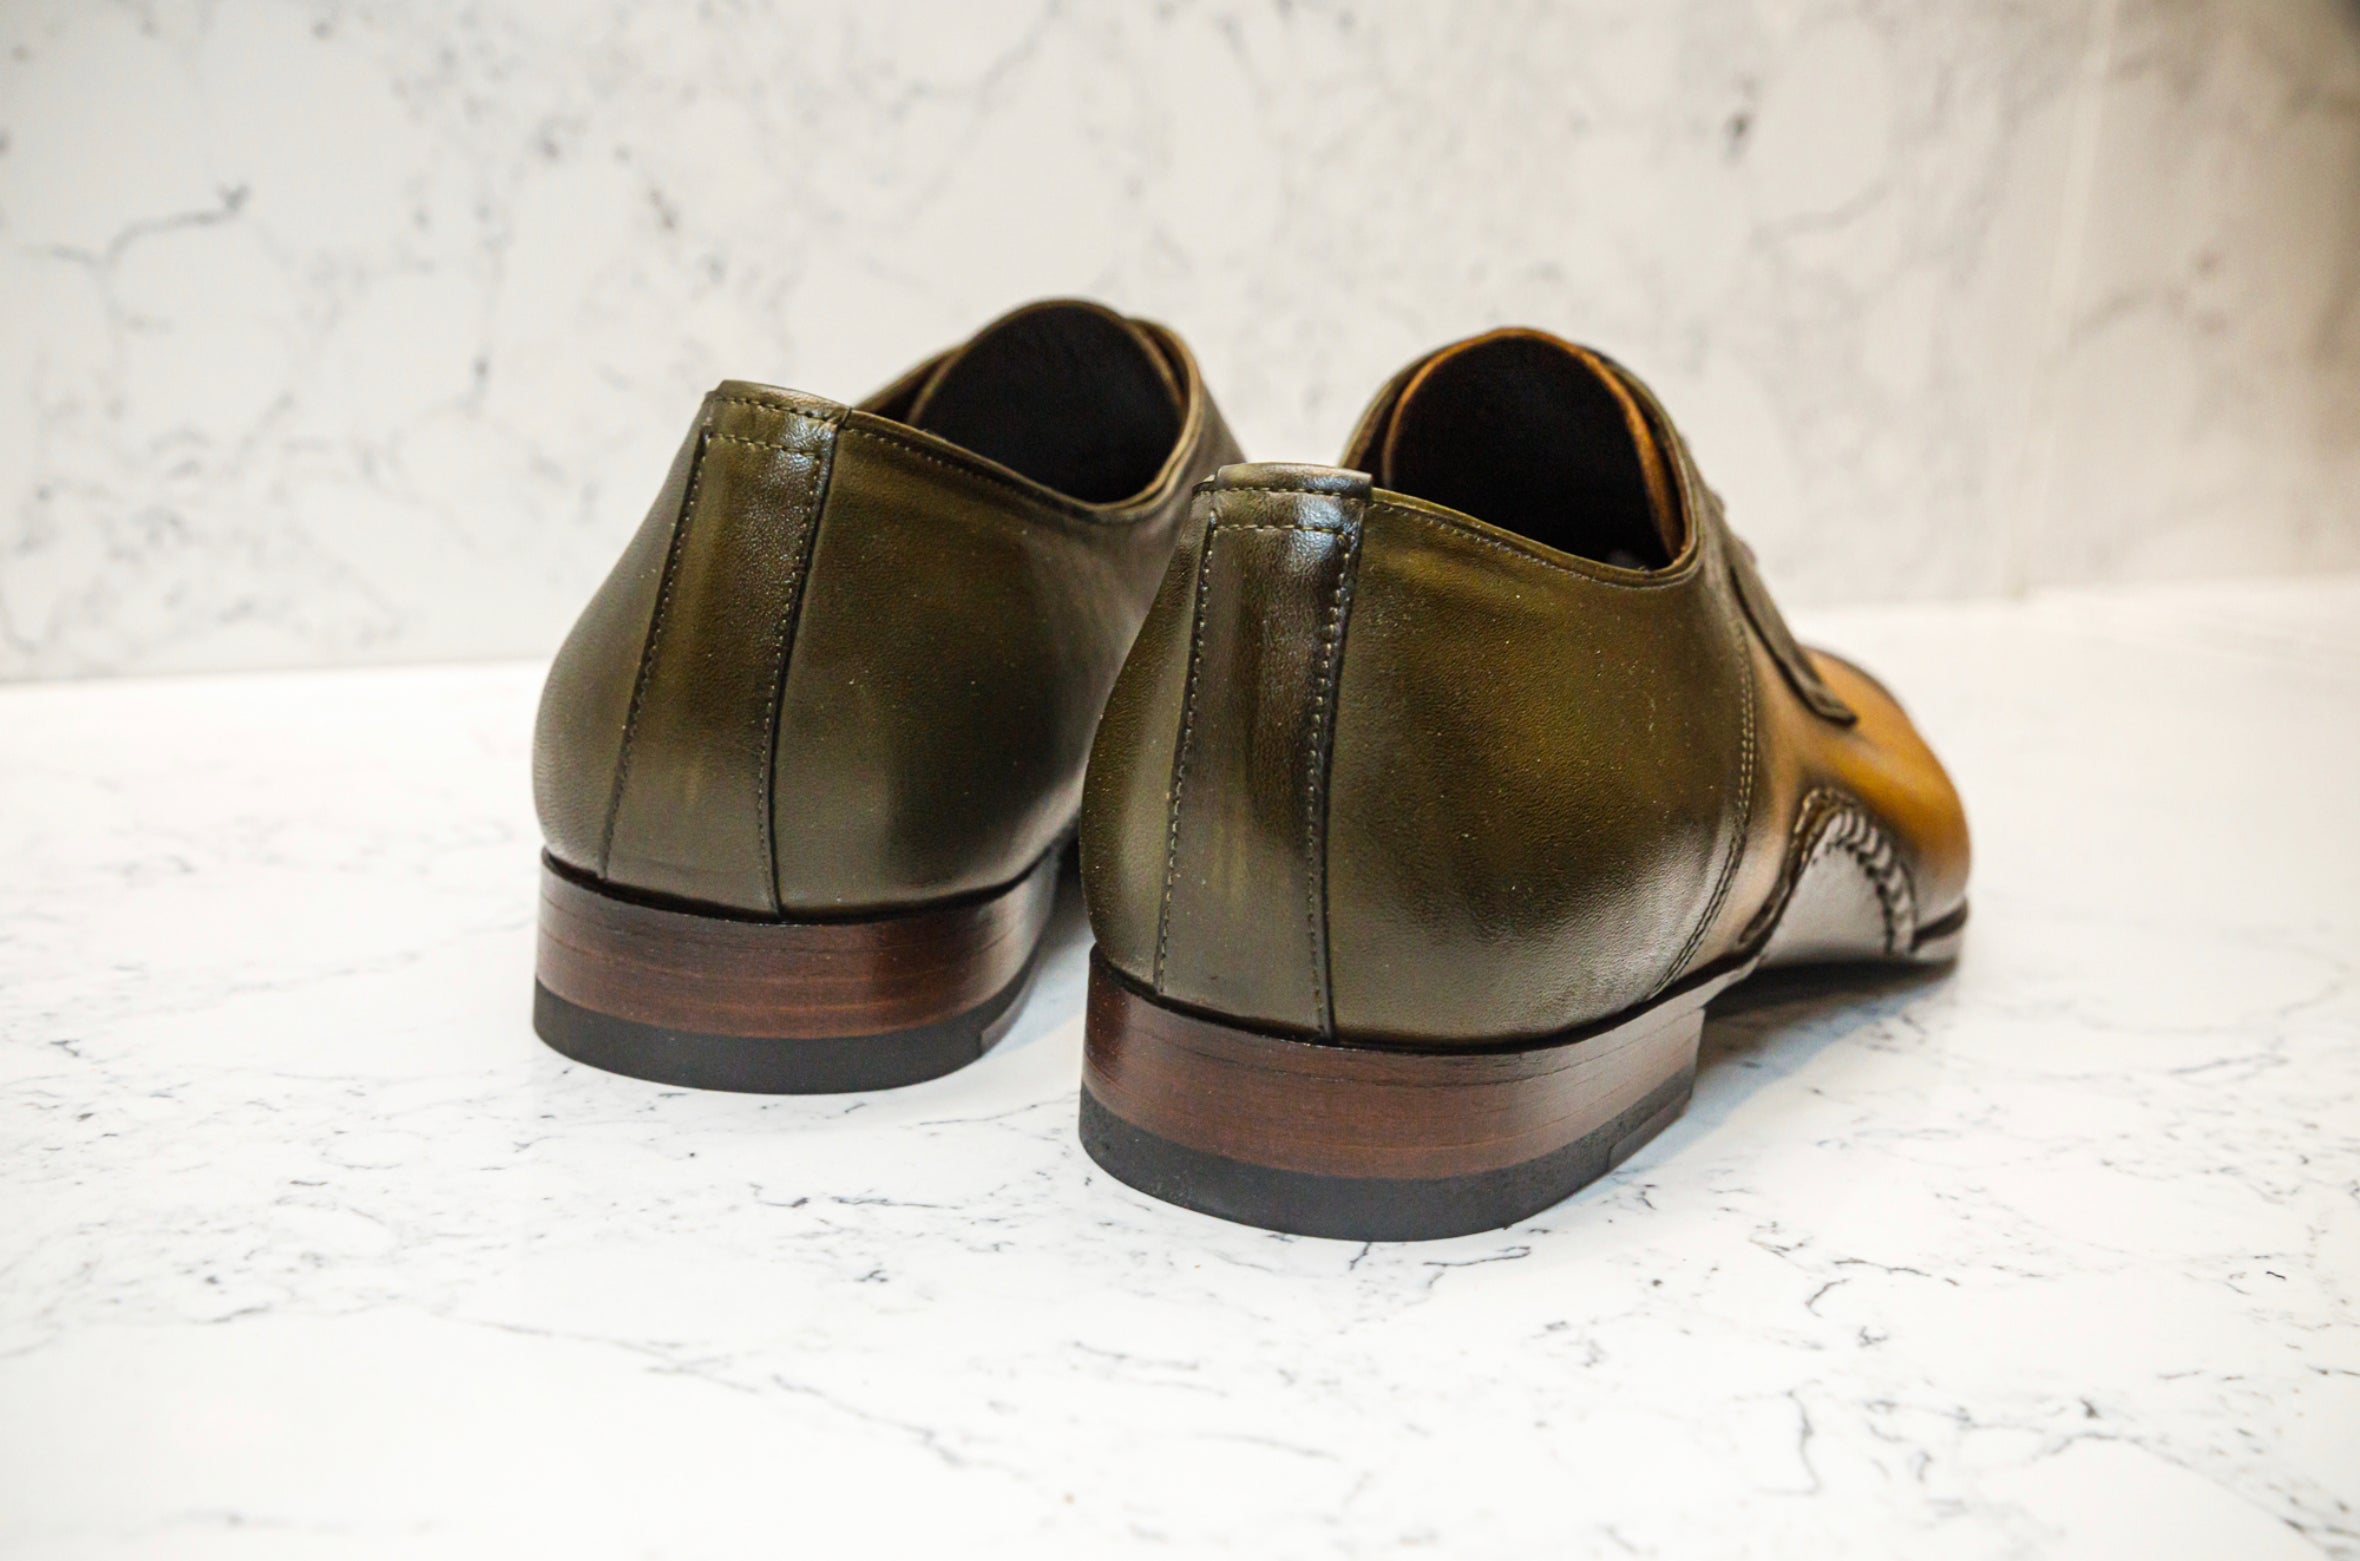 The Opanka Patina Shoes - Brown &amp; Gold - Brogues by Urbbana